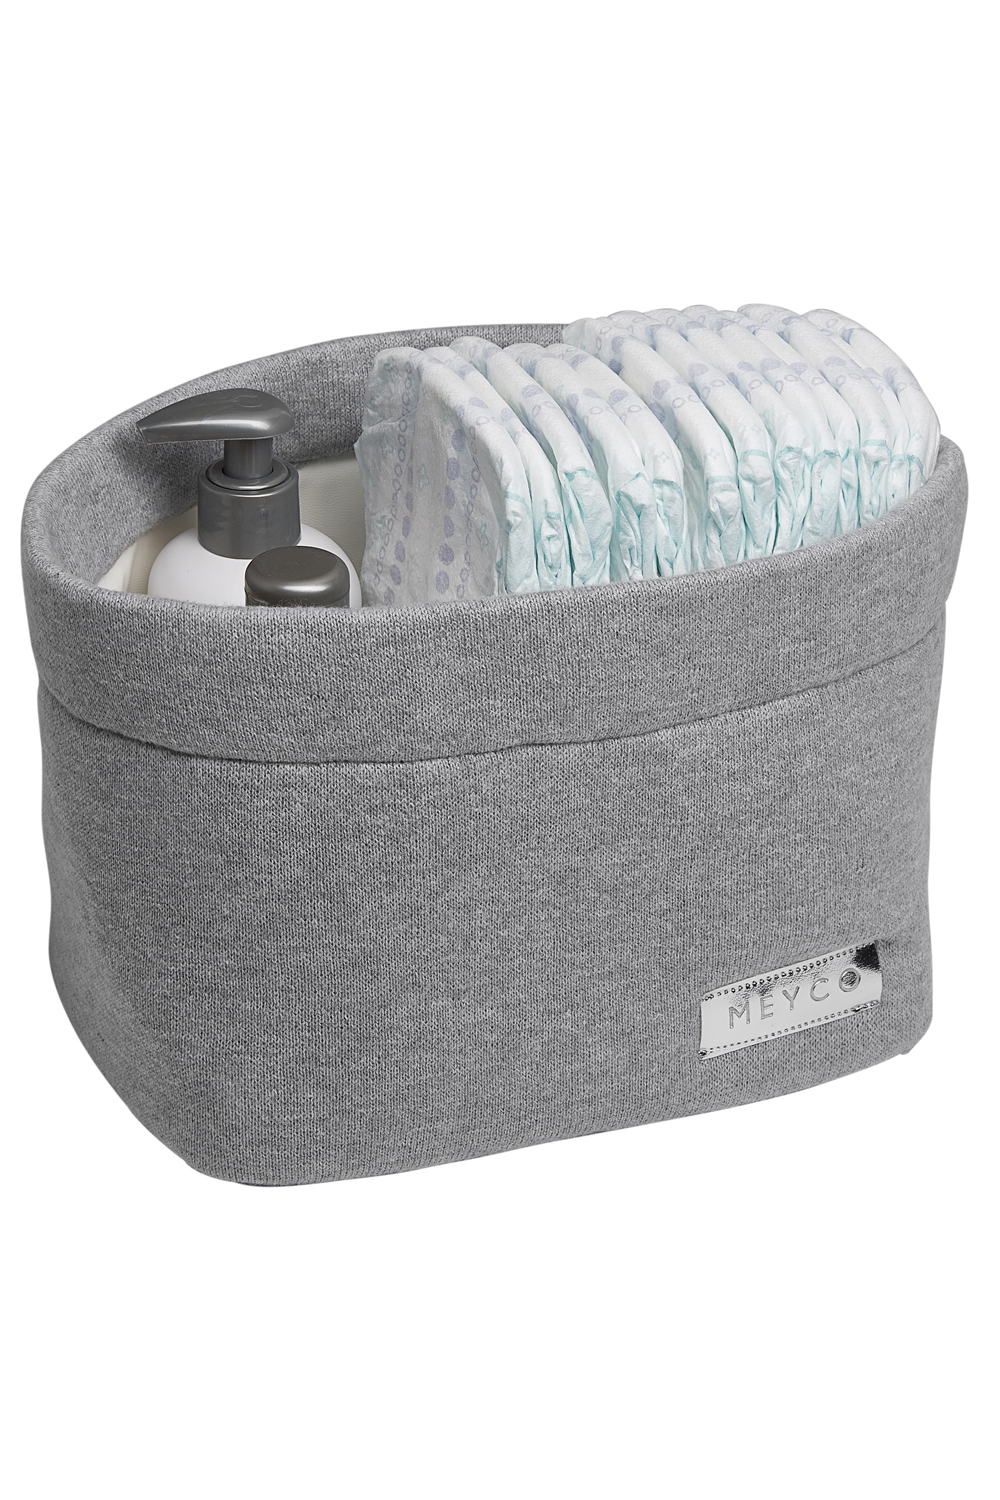 Storage Basket Small Knit Basic - Grey Melange - 21X16Xh16cm